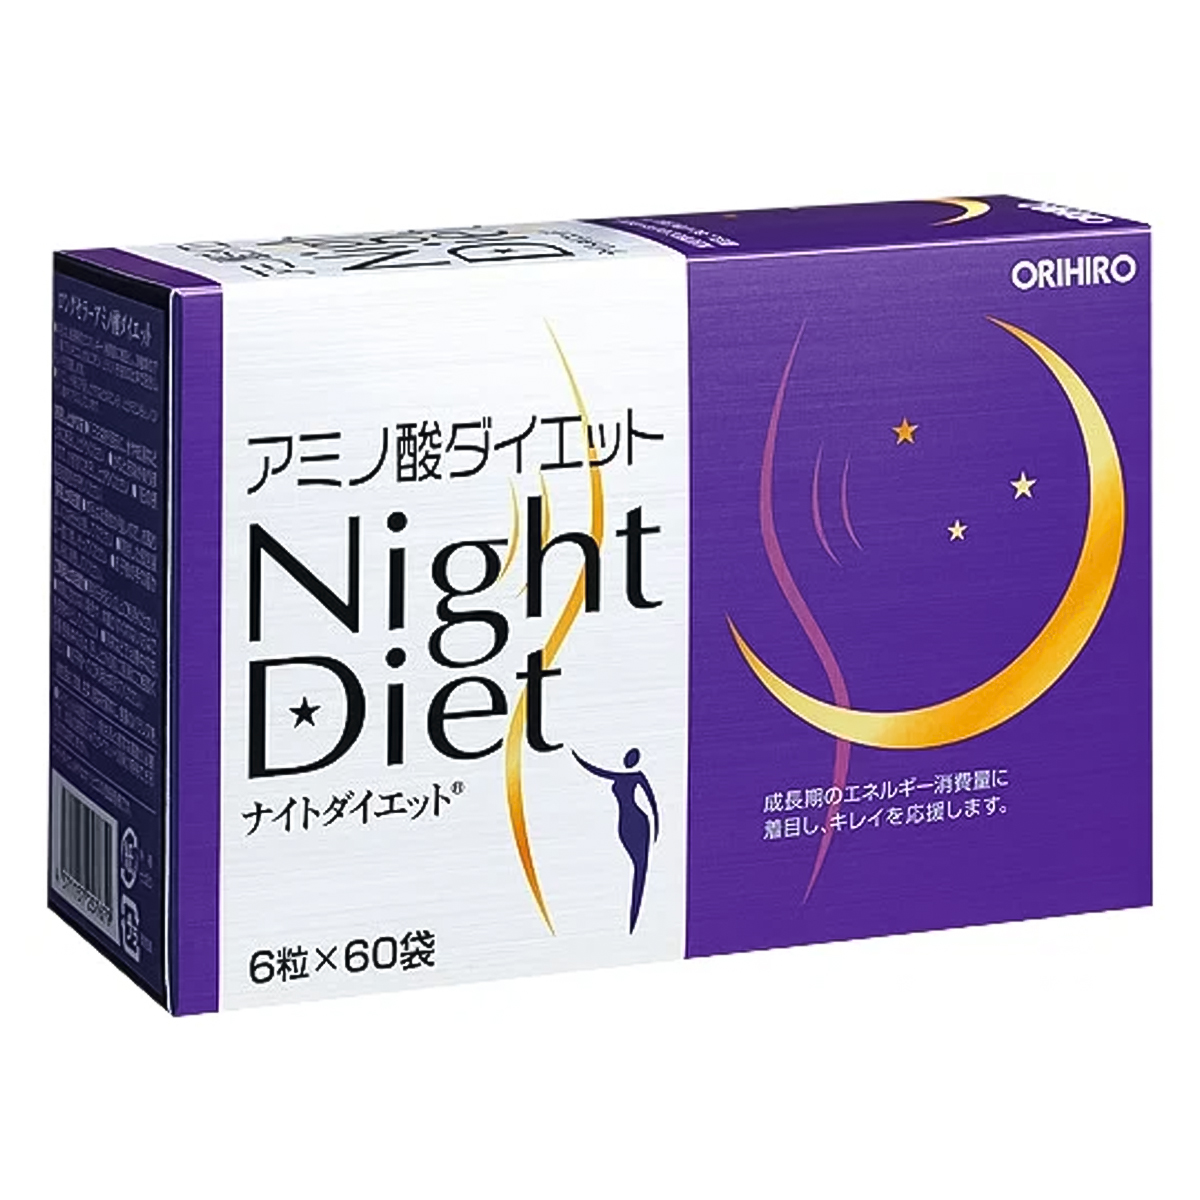 Ночная диета, 360 таблеток, ОРИХИРО - фото 1